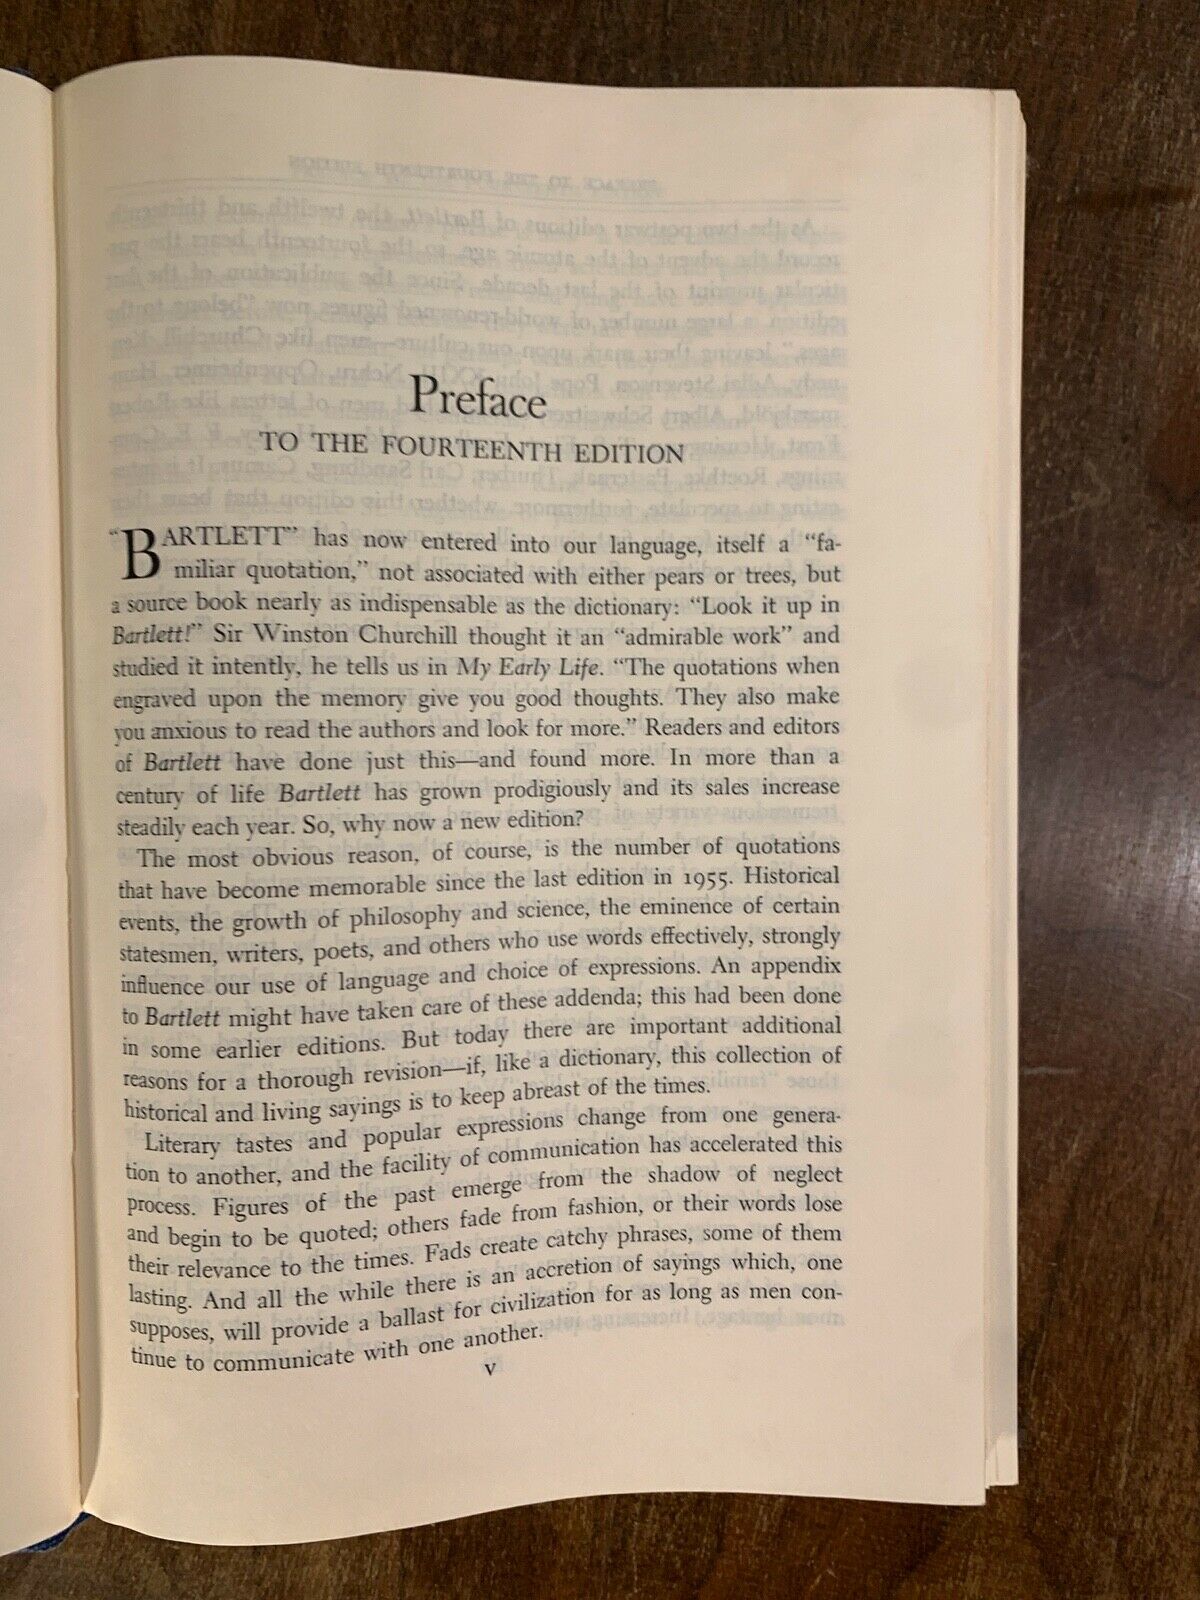 Bartlett's Familiar Quotations, 14th Edition (1968), 2B